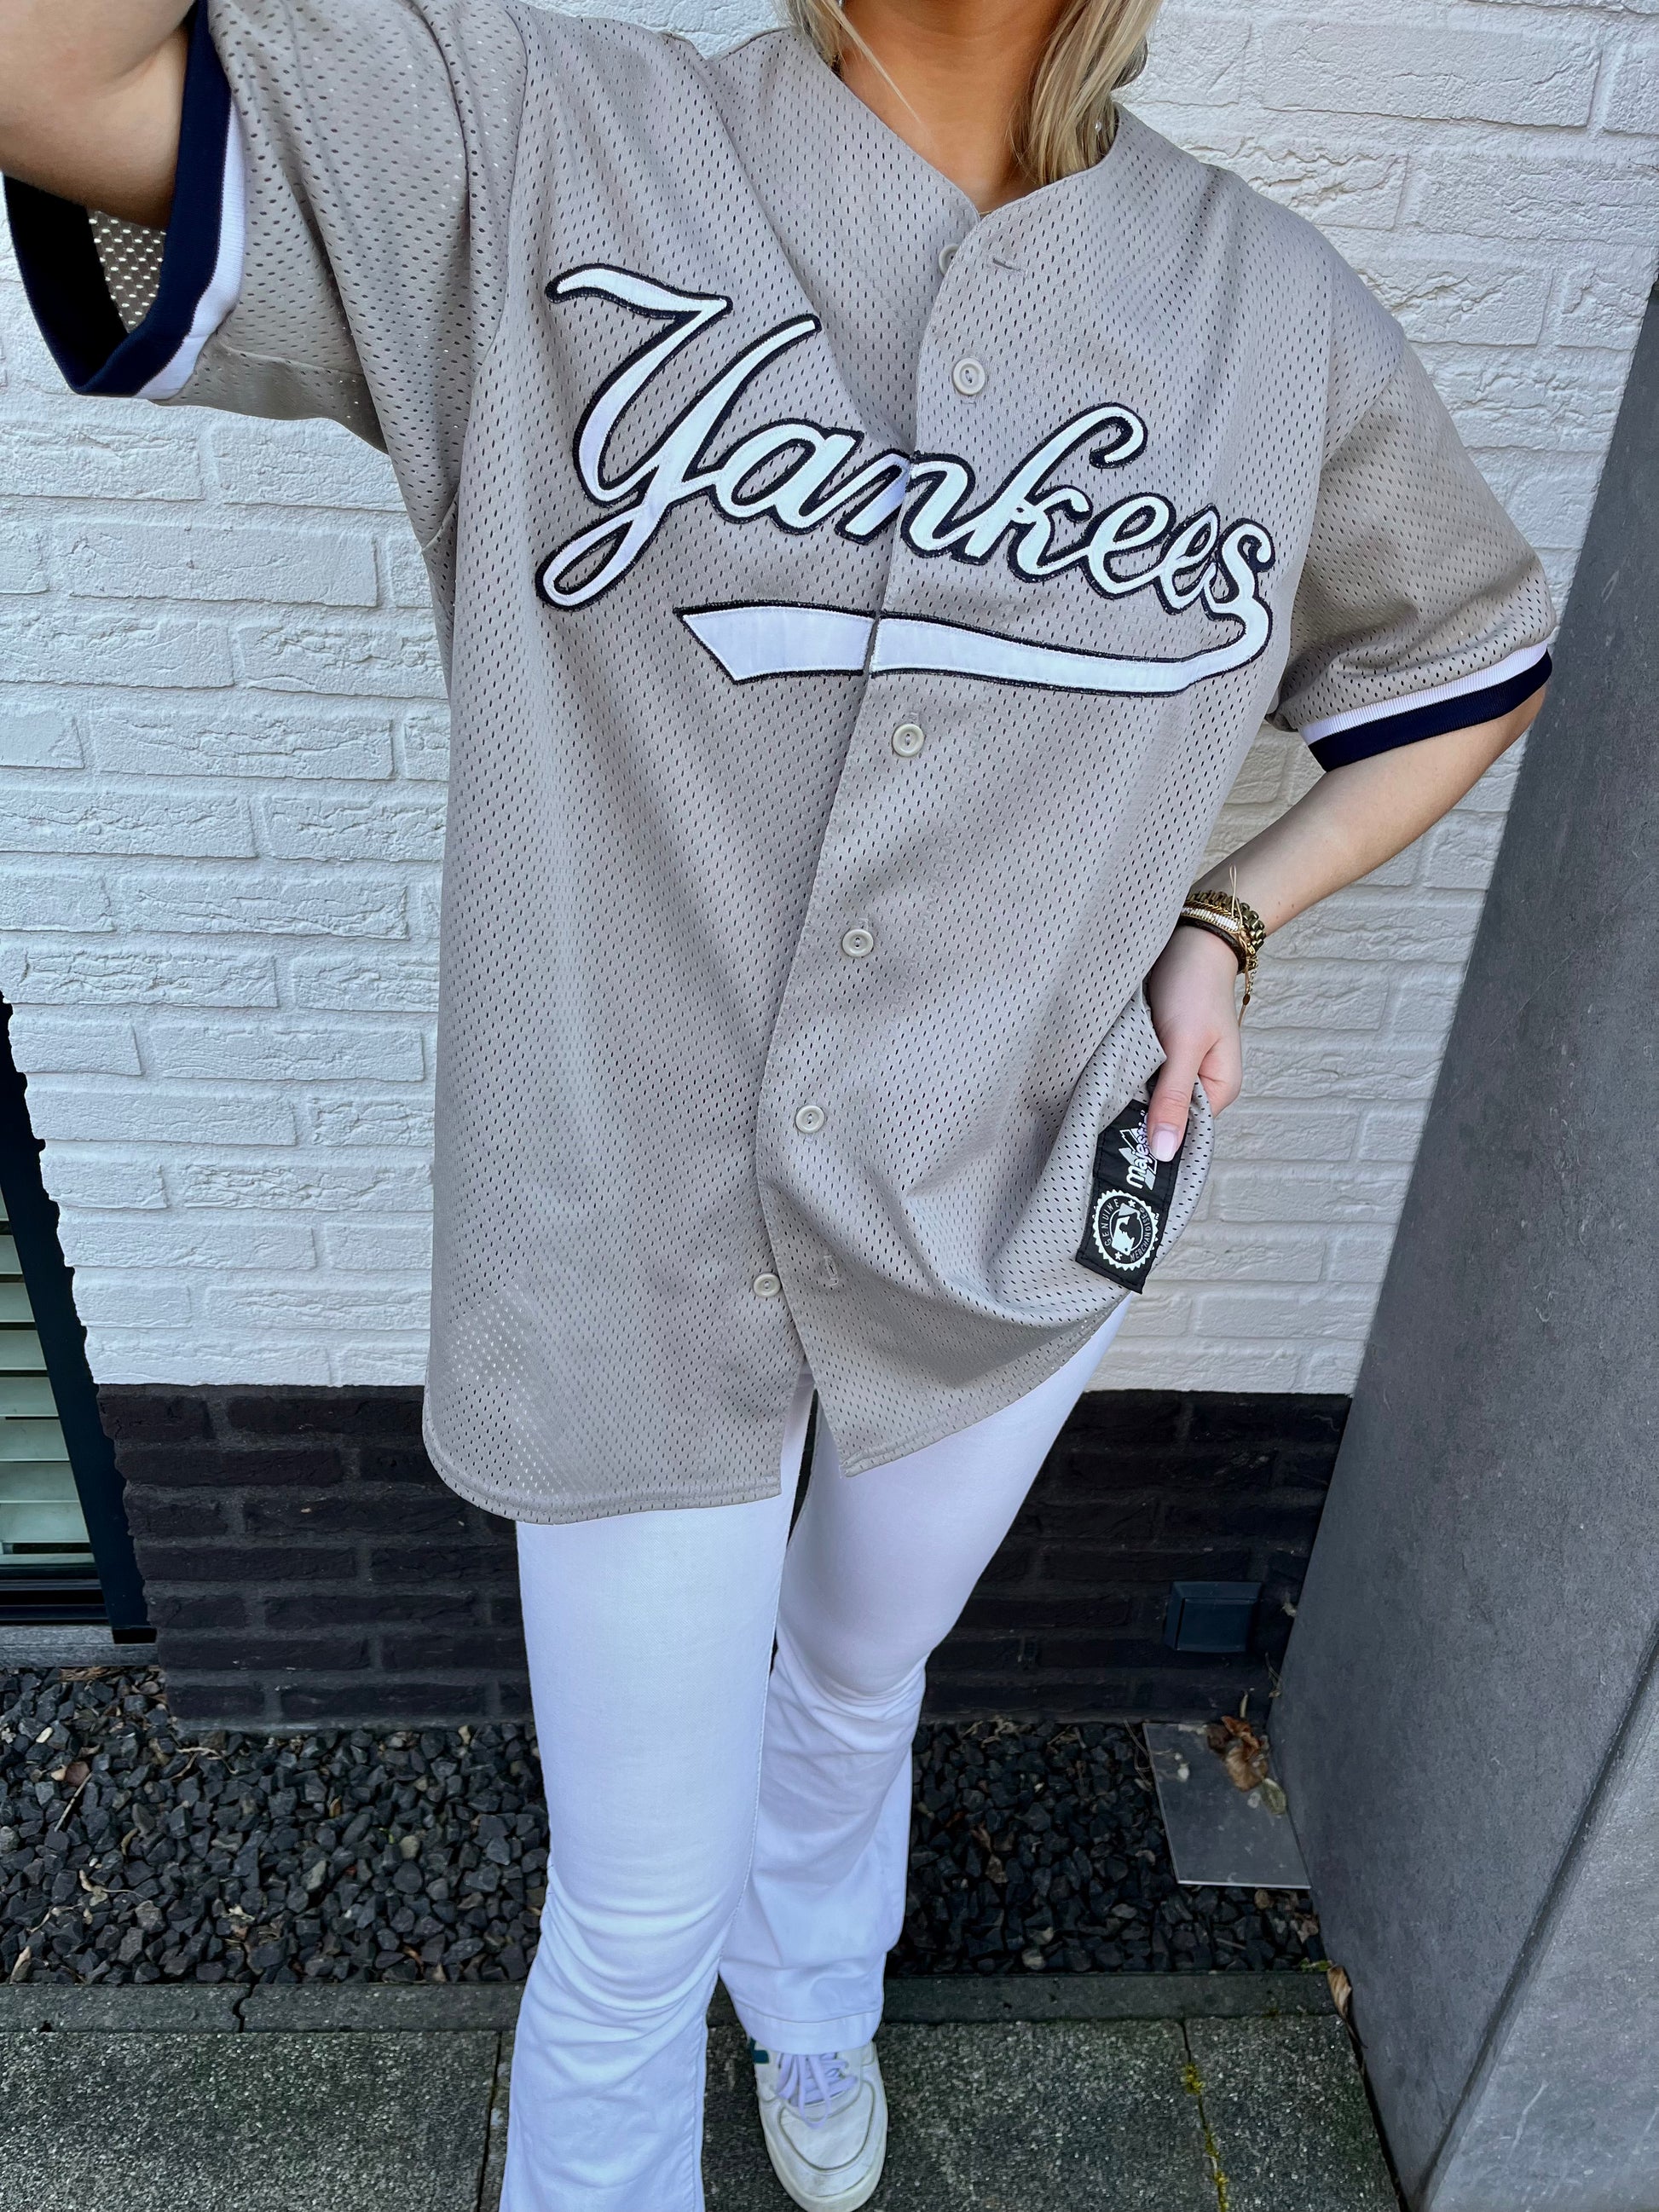 Vintage New York Yankees jersey